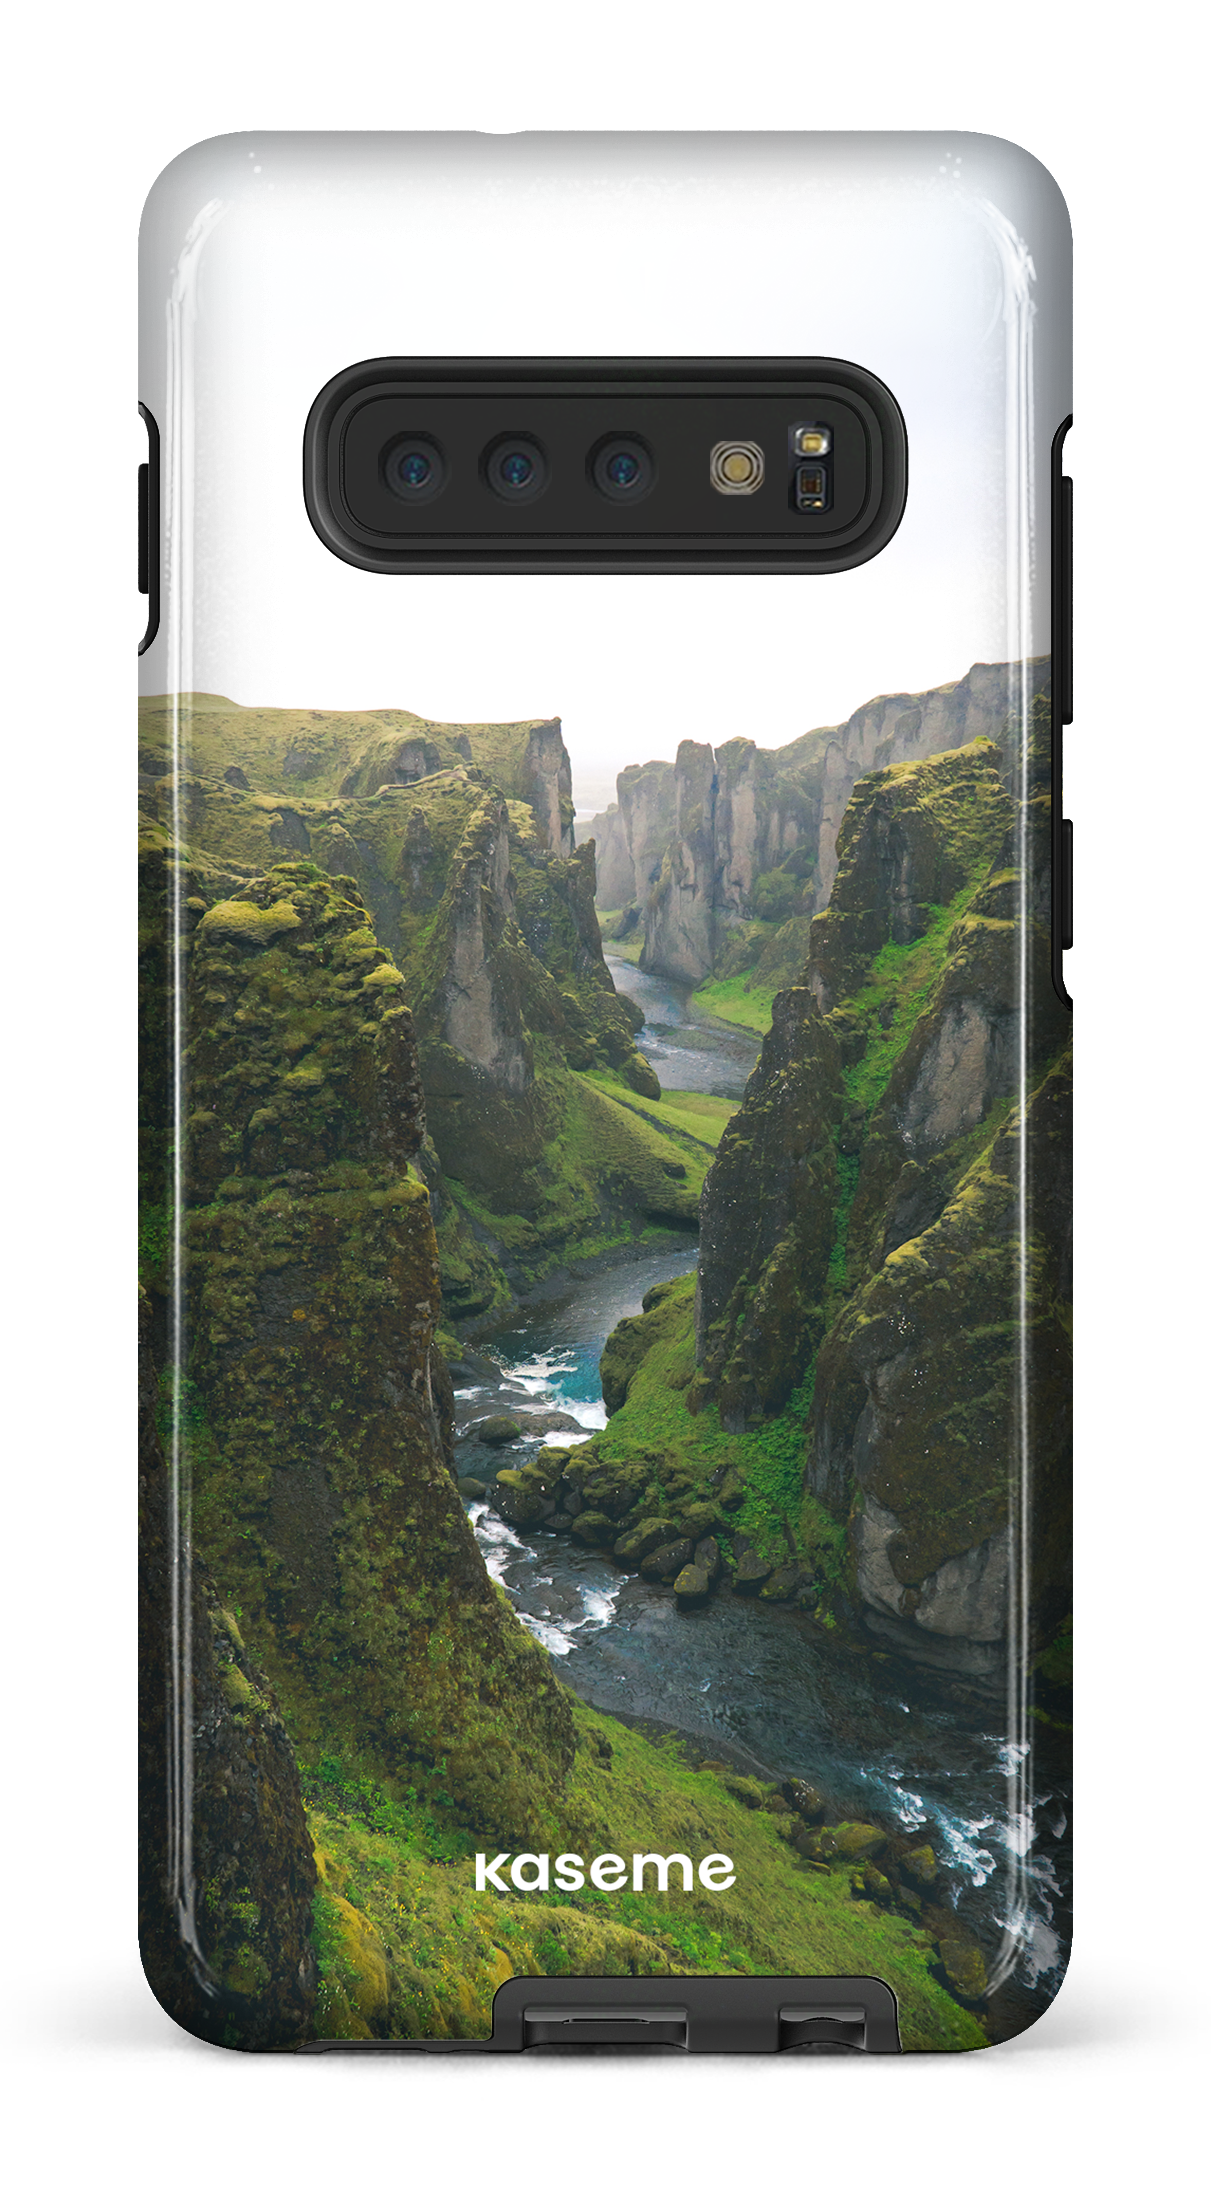 Iceland - Galaxy S10 Plus